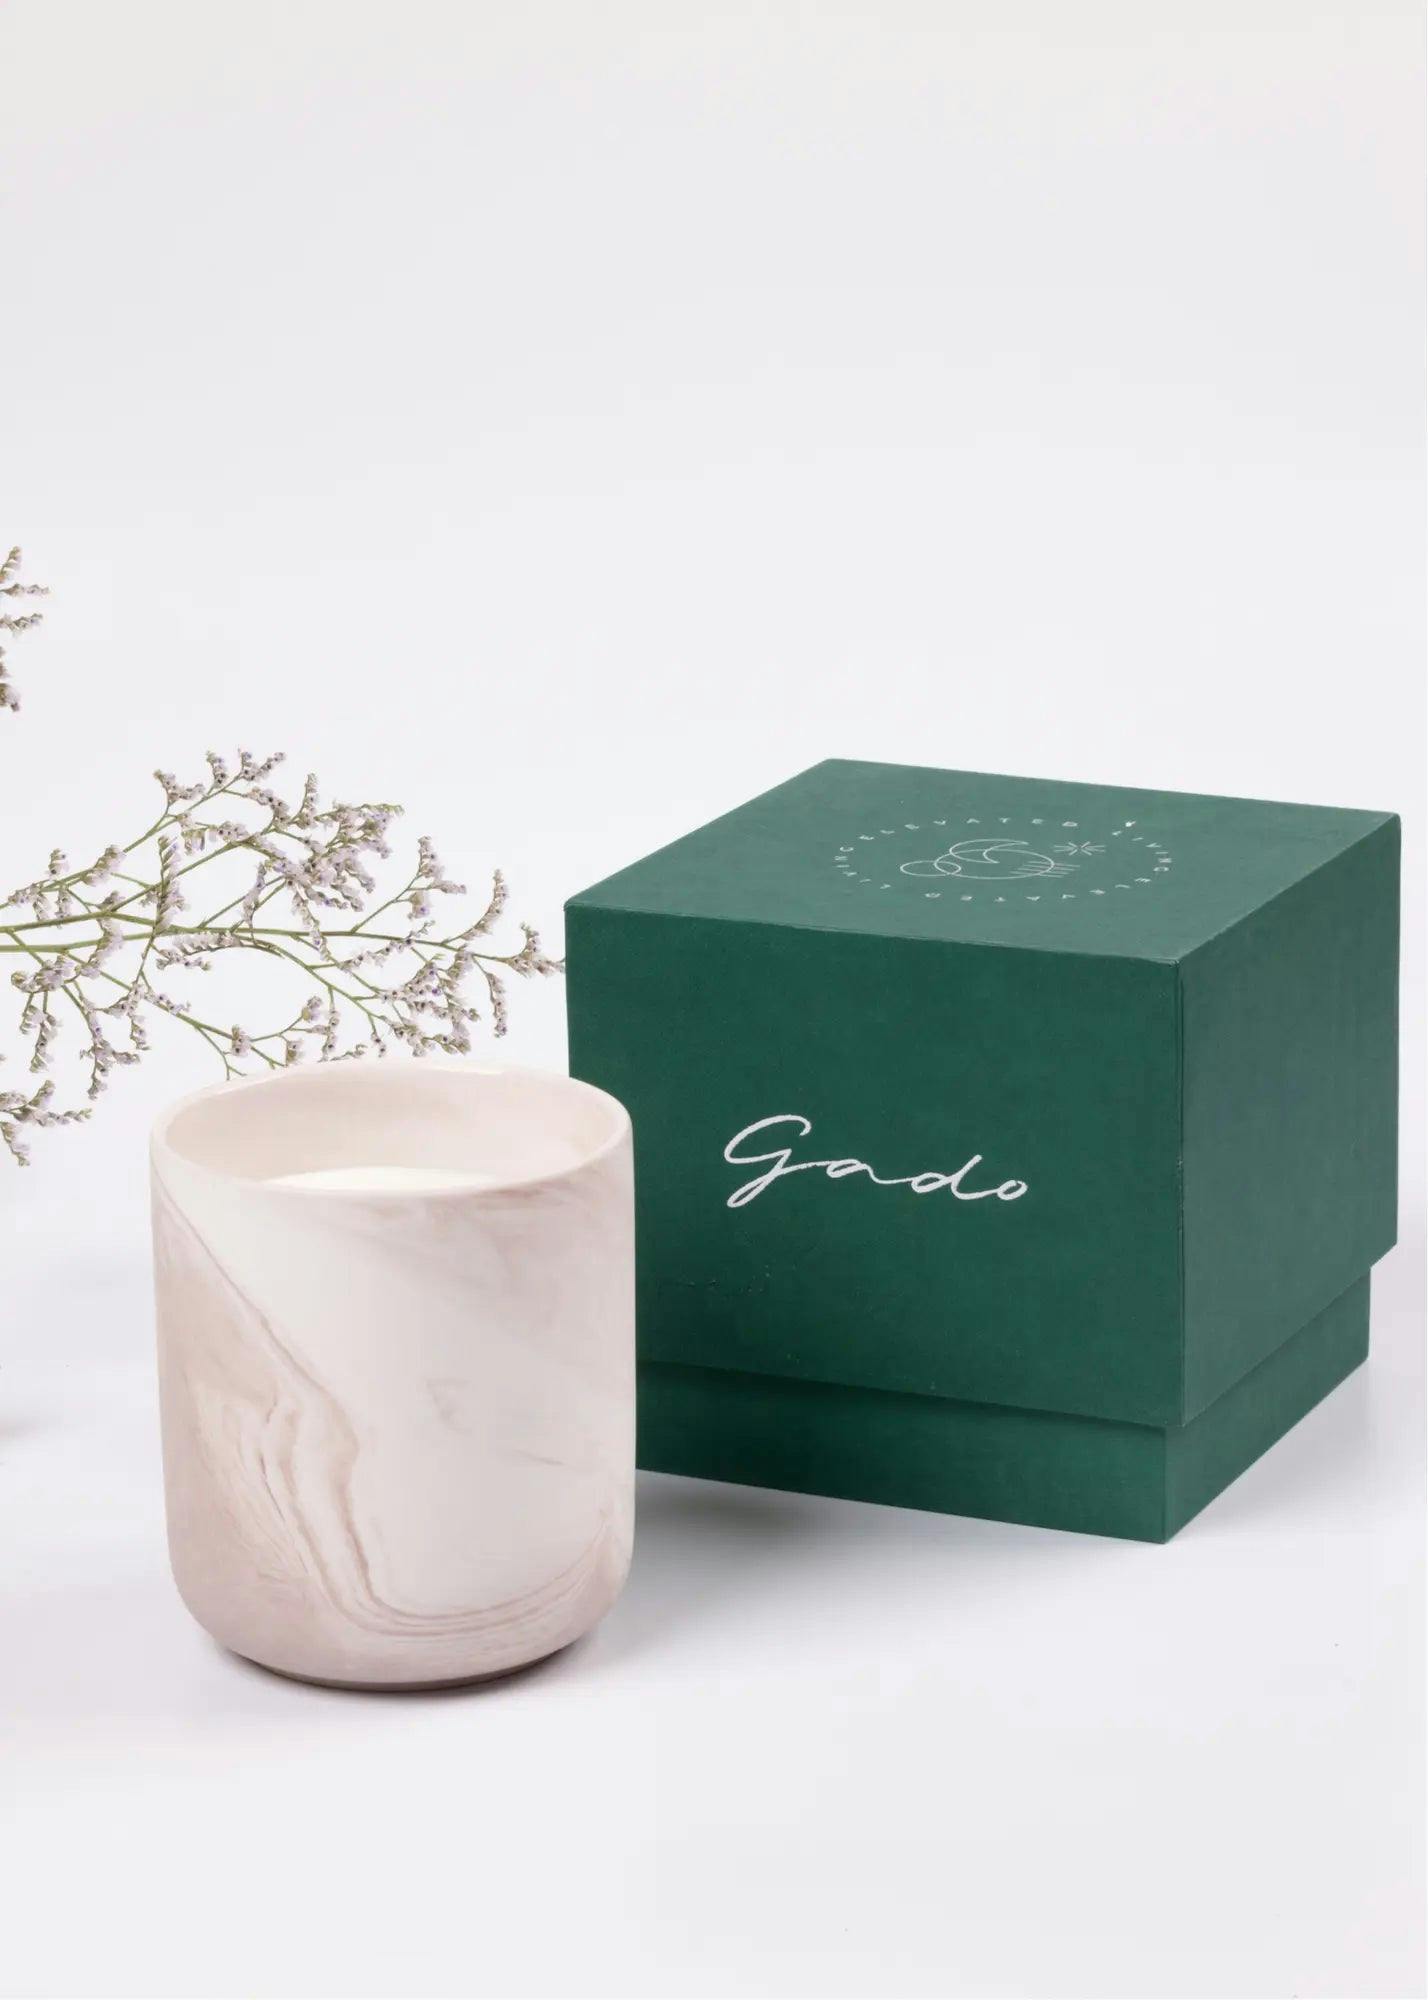 Izna Candle - Spiced Cedar & Musk, a product by Gado Living